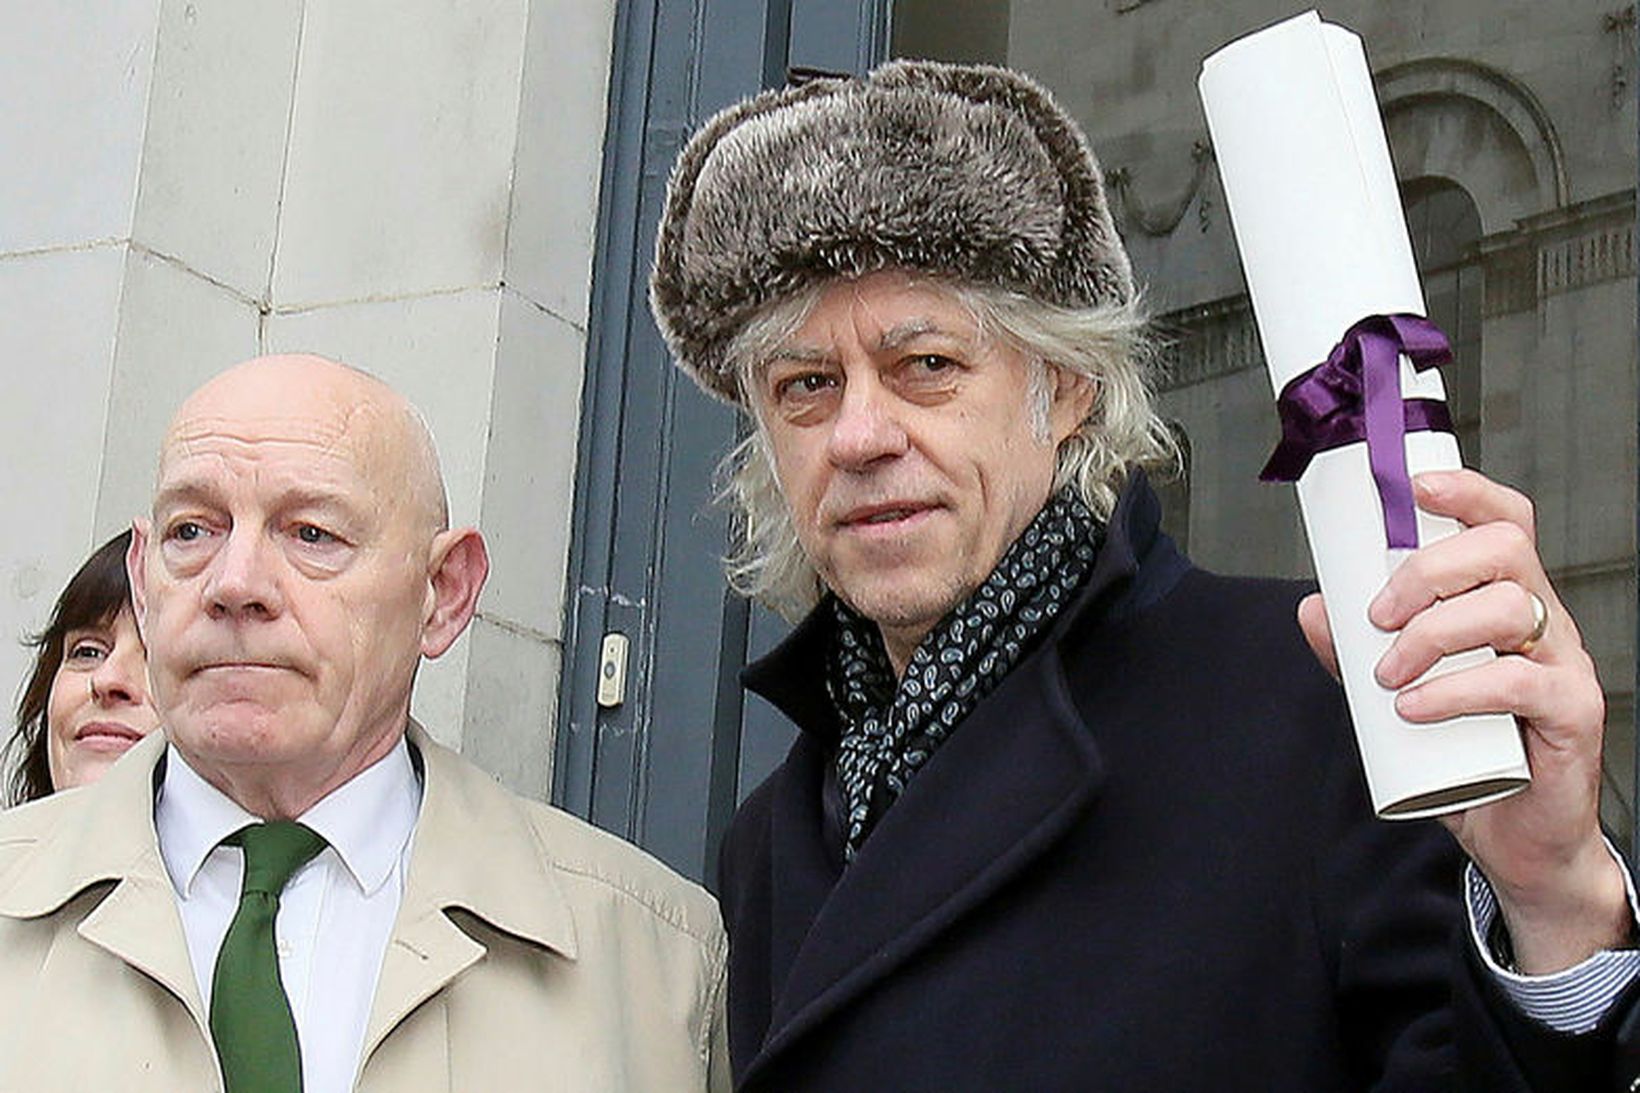 Bob Geldof.